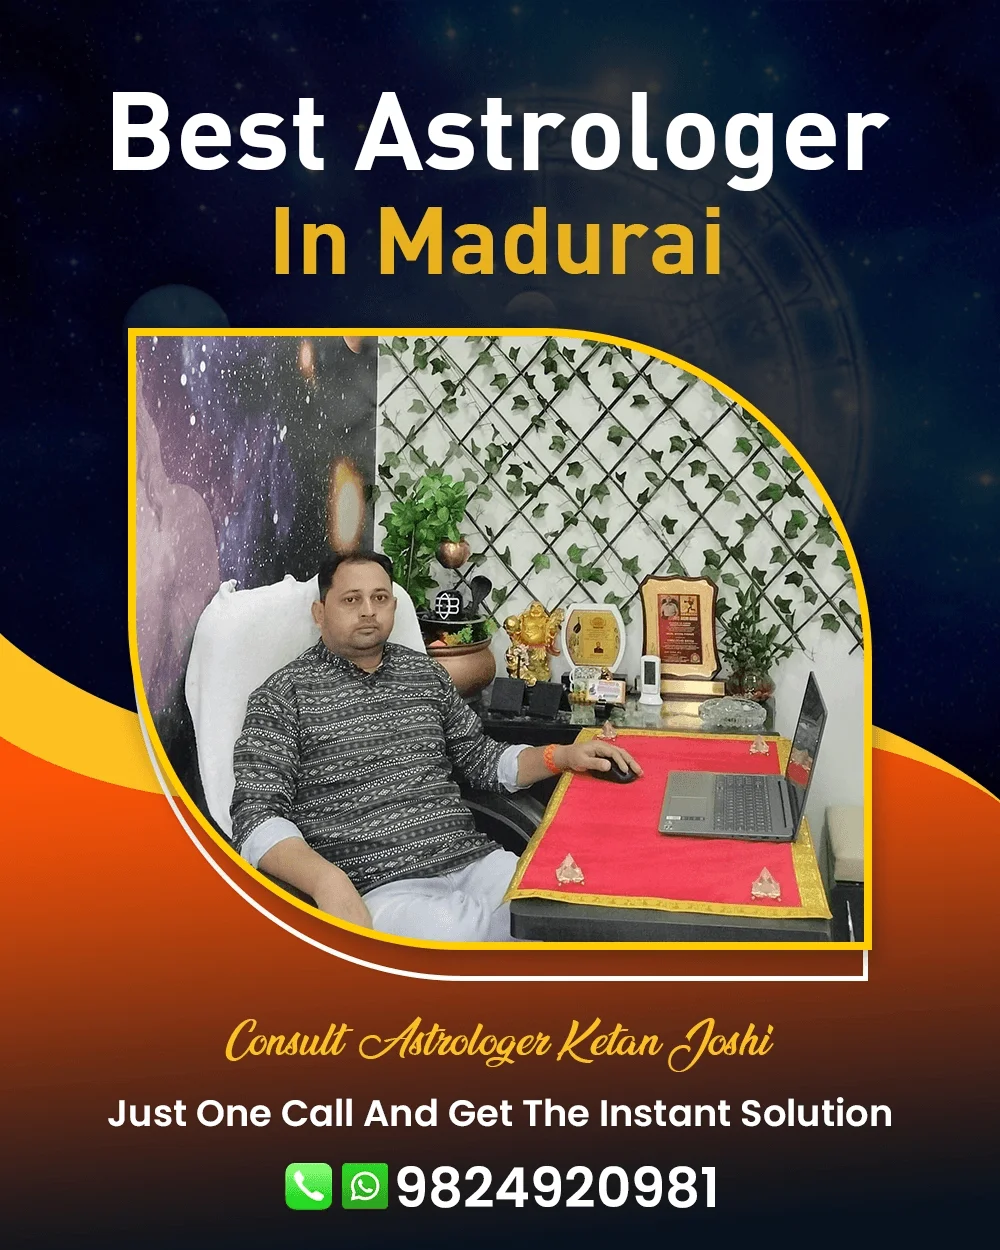 Best Astrologer In Madurai